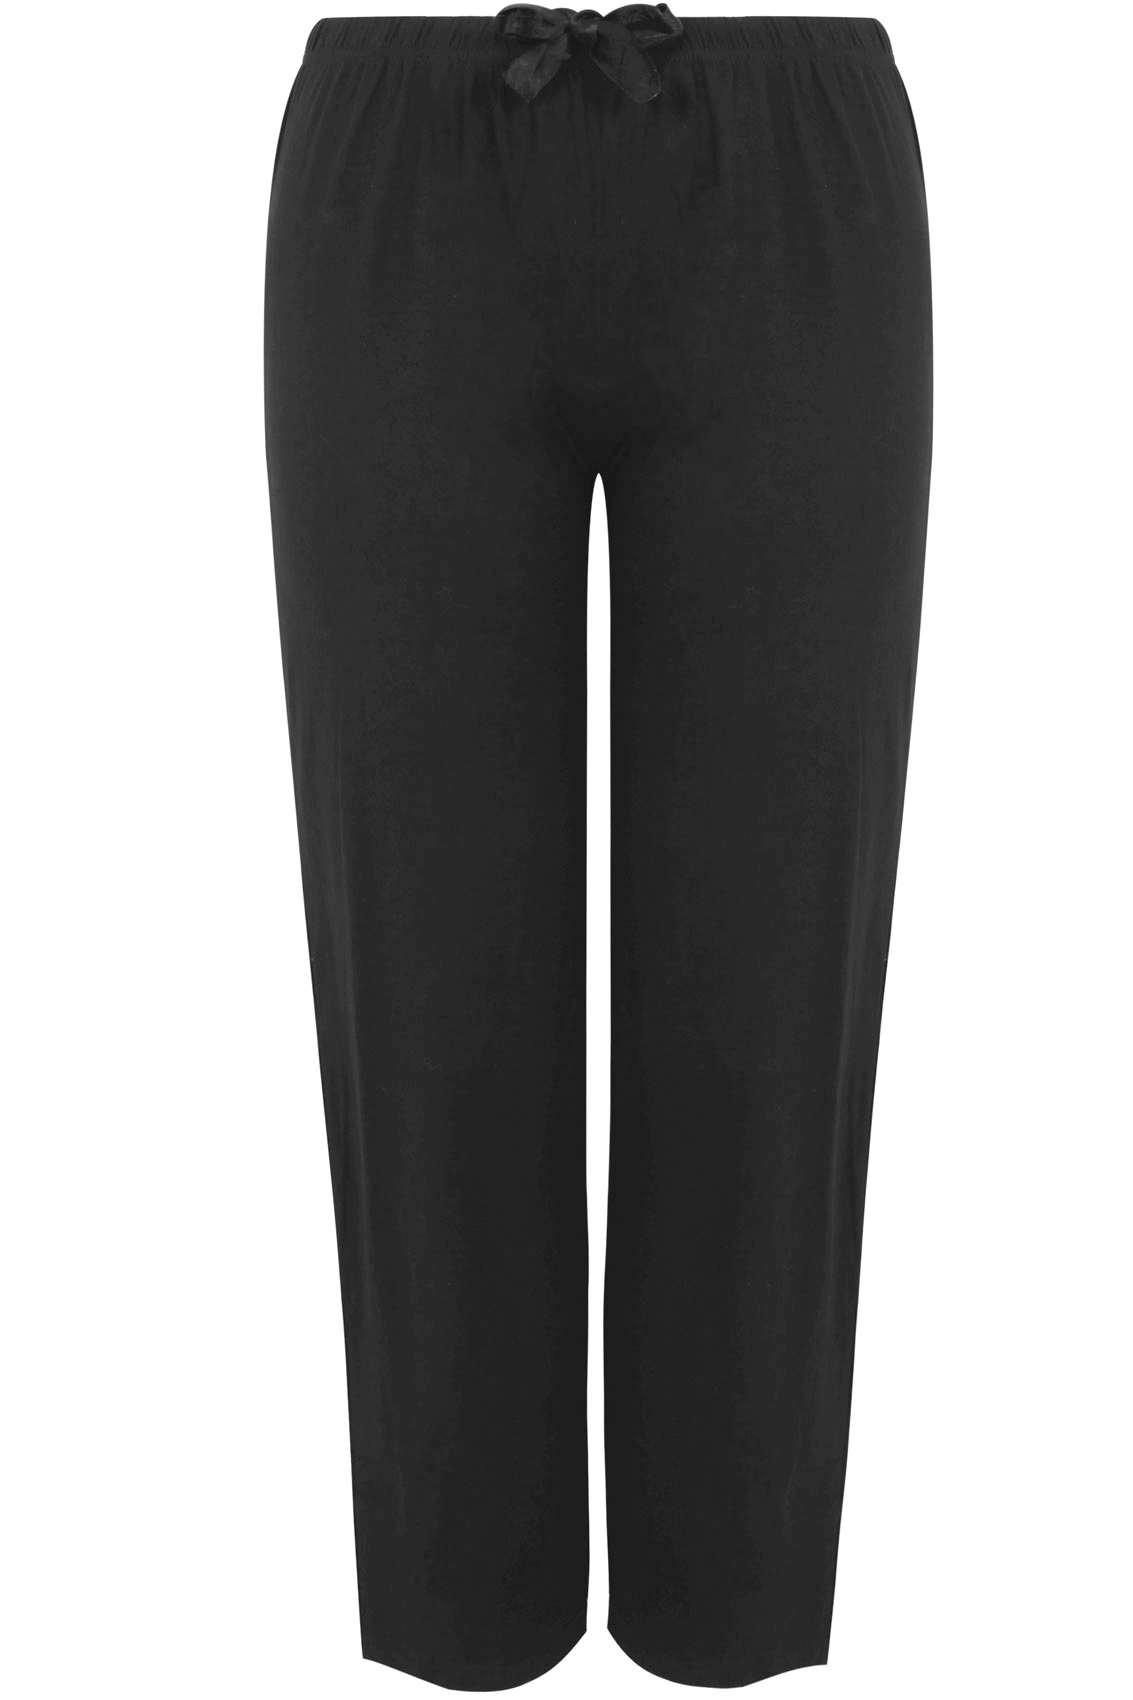 2 PACK Plus Size Black Wide Leg Pyjama Bottoms | Yours Clothing